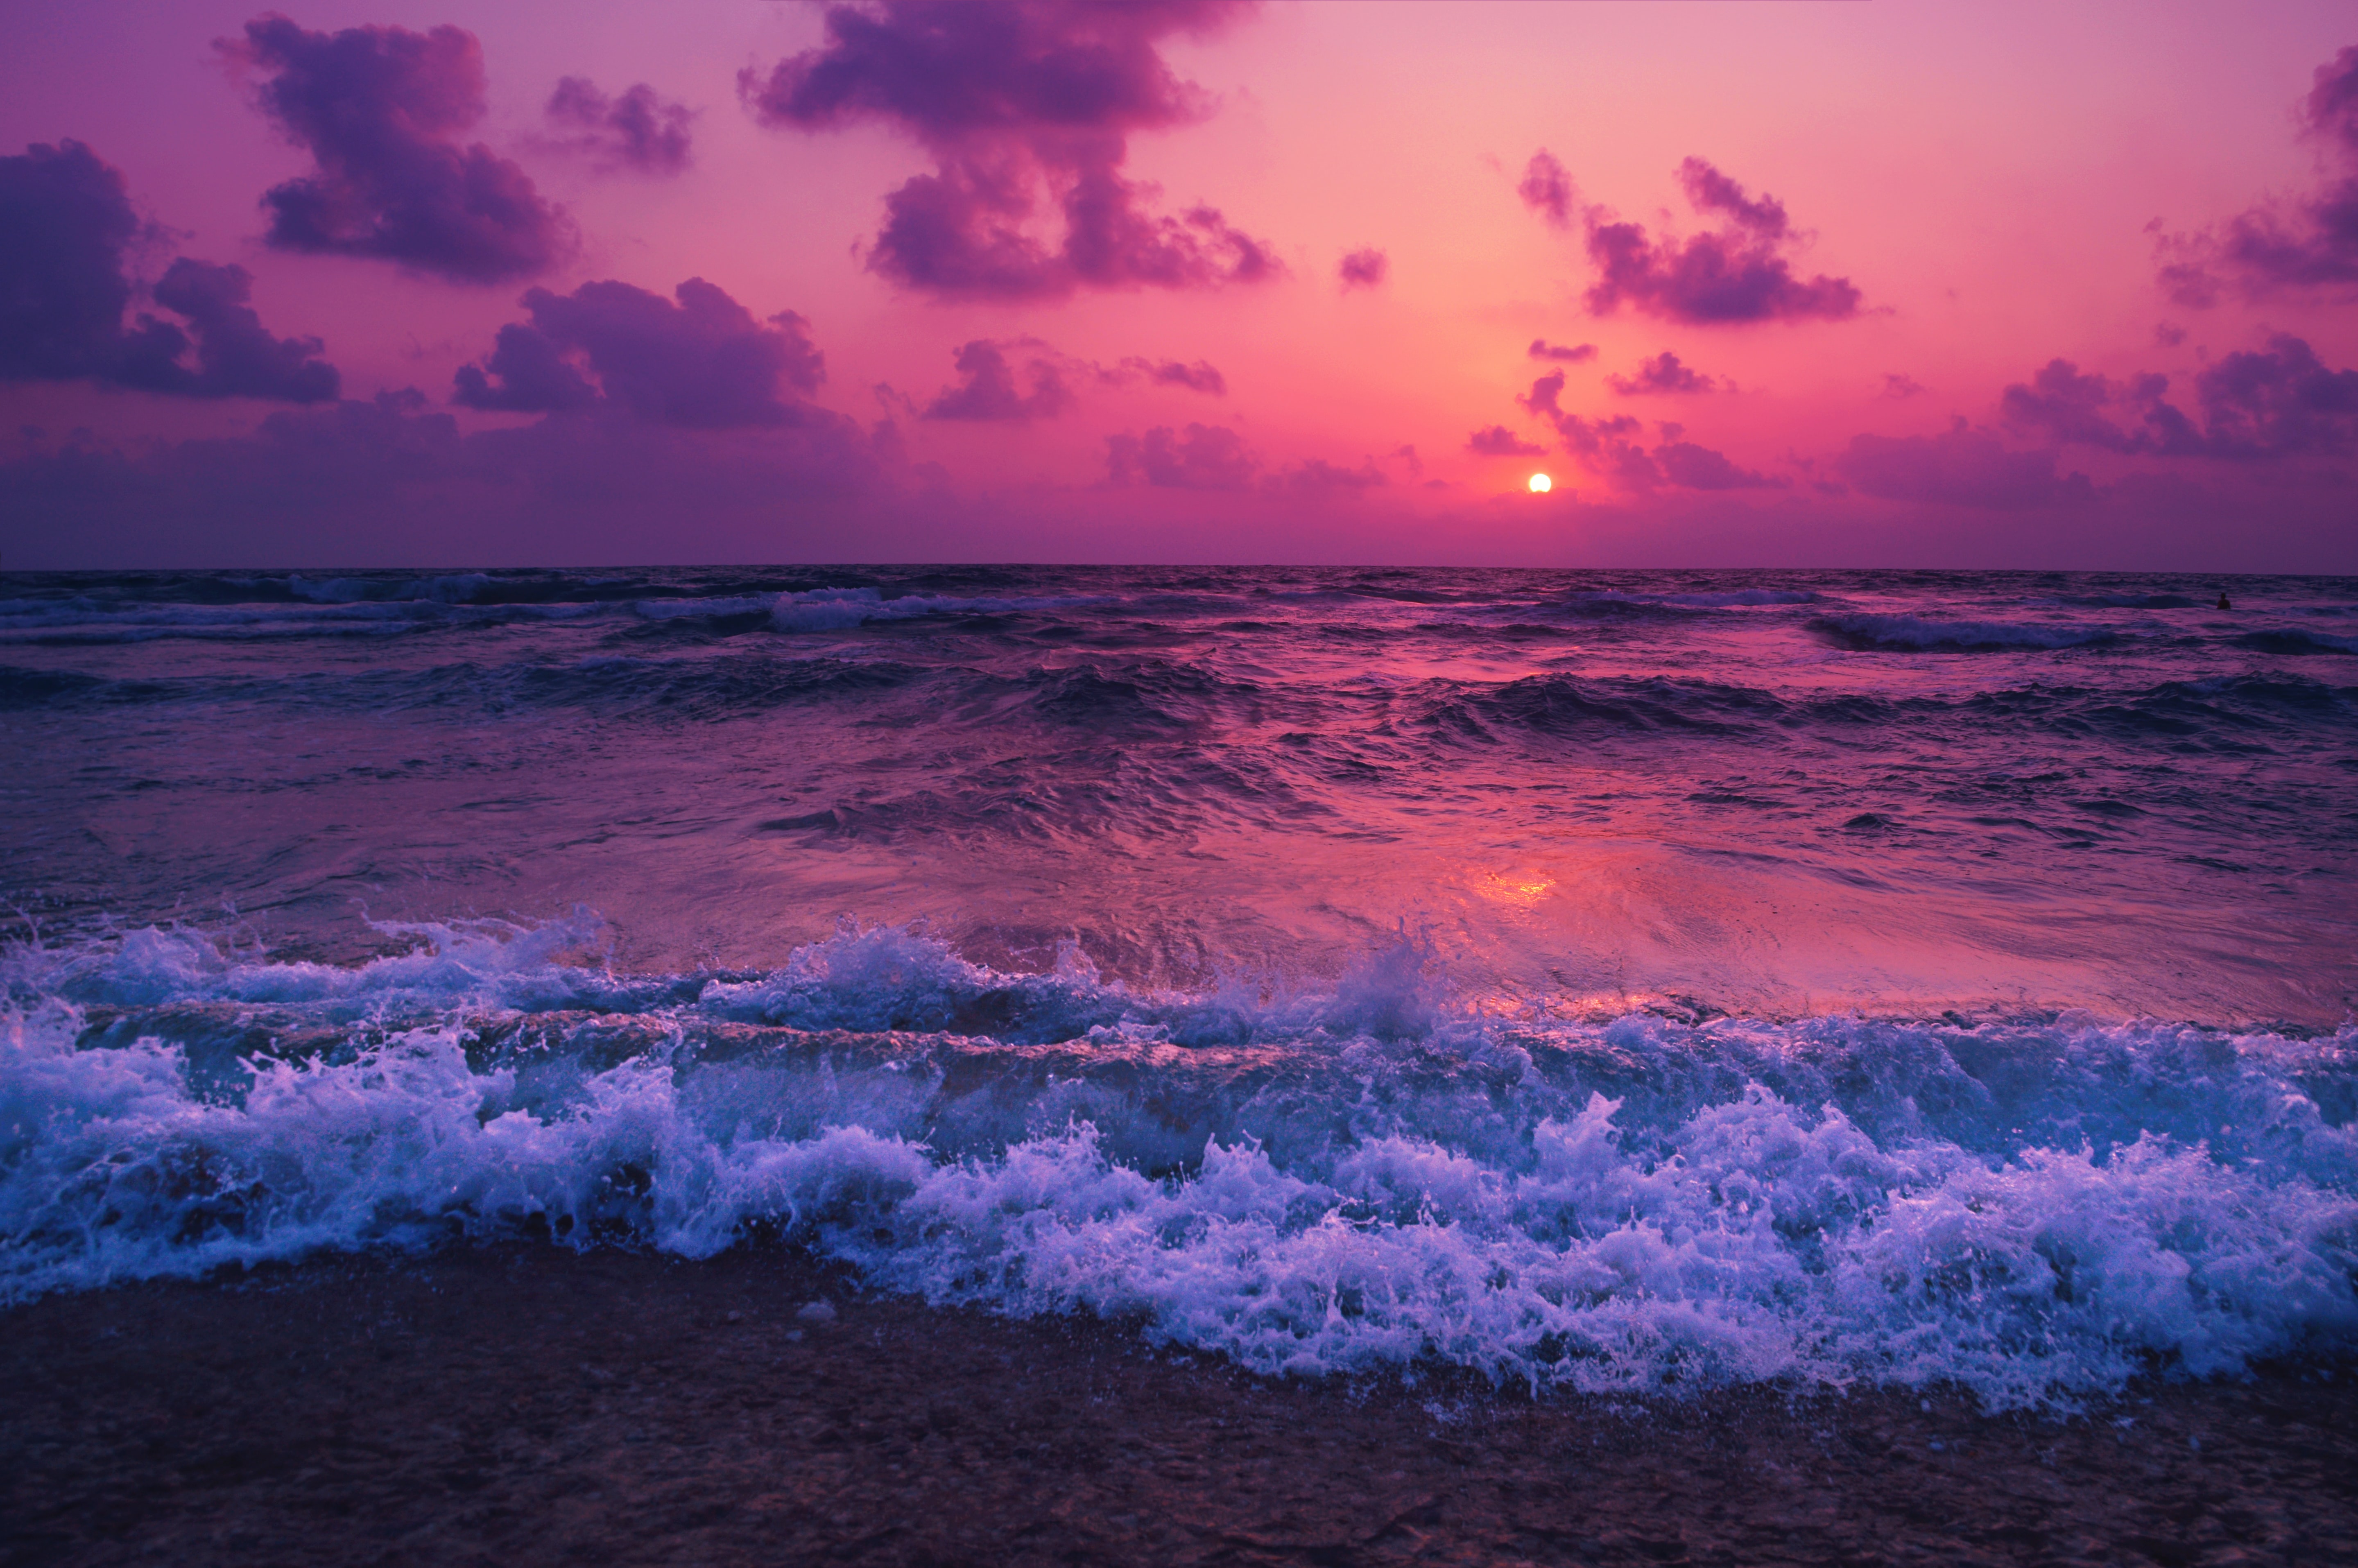 Seaside picture under a purple sky